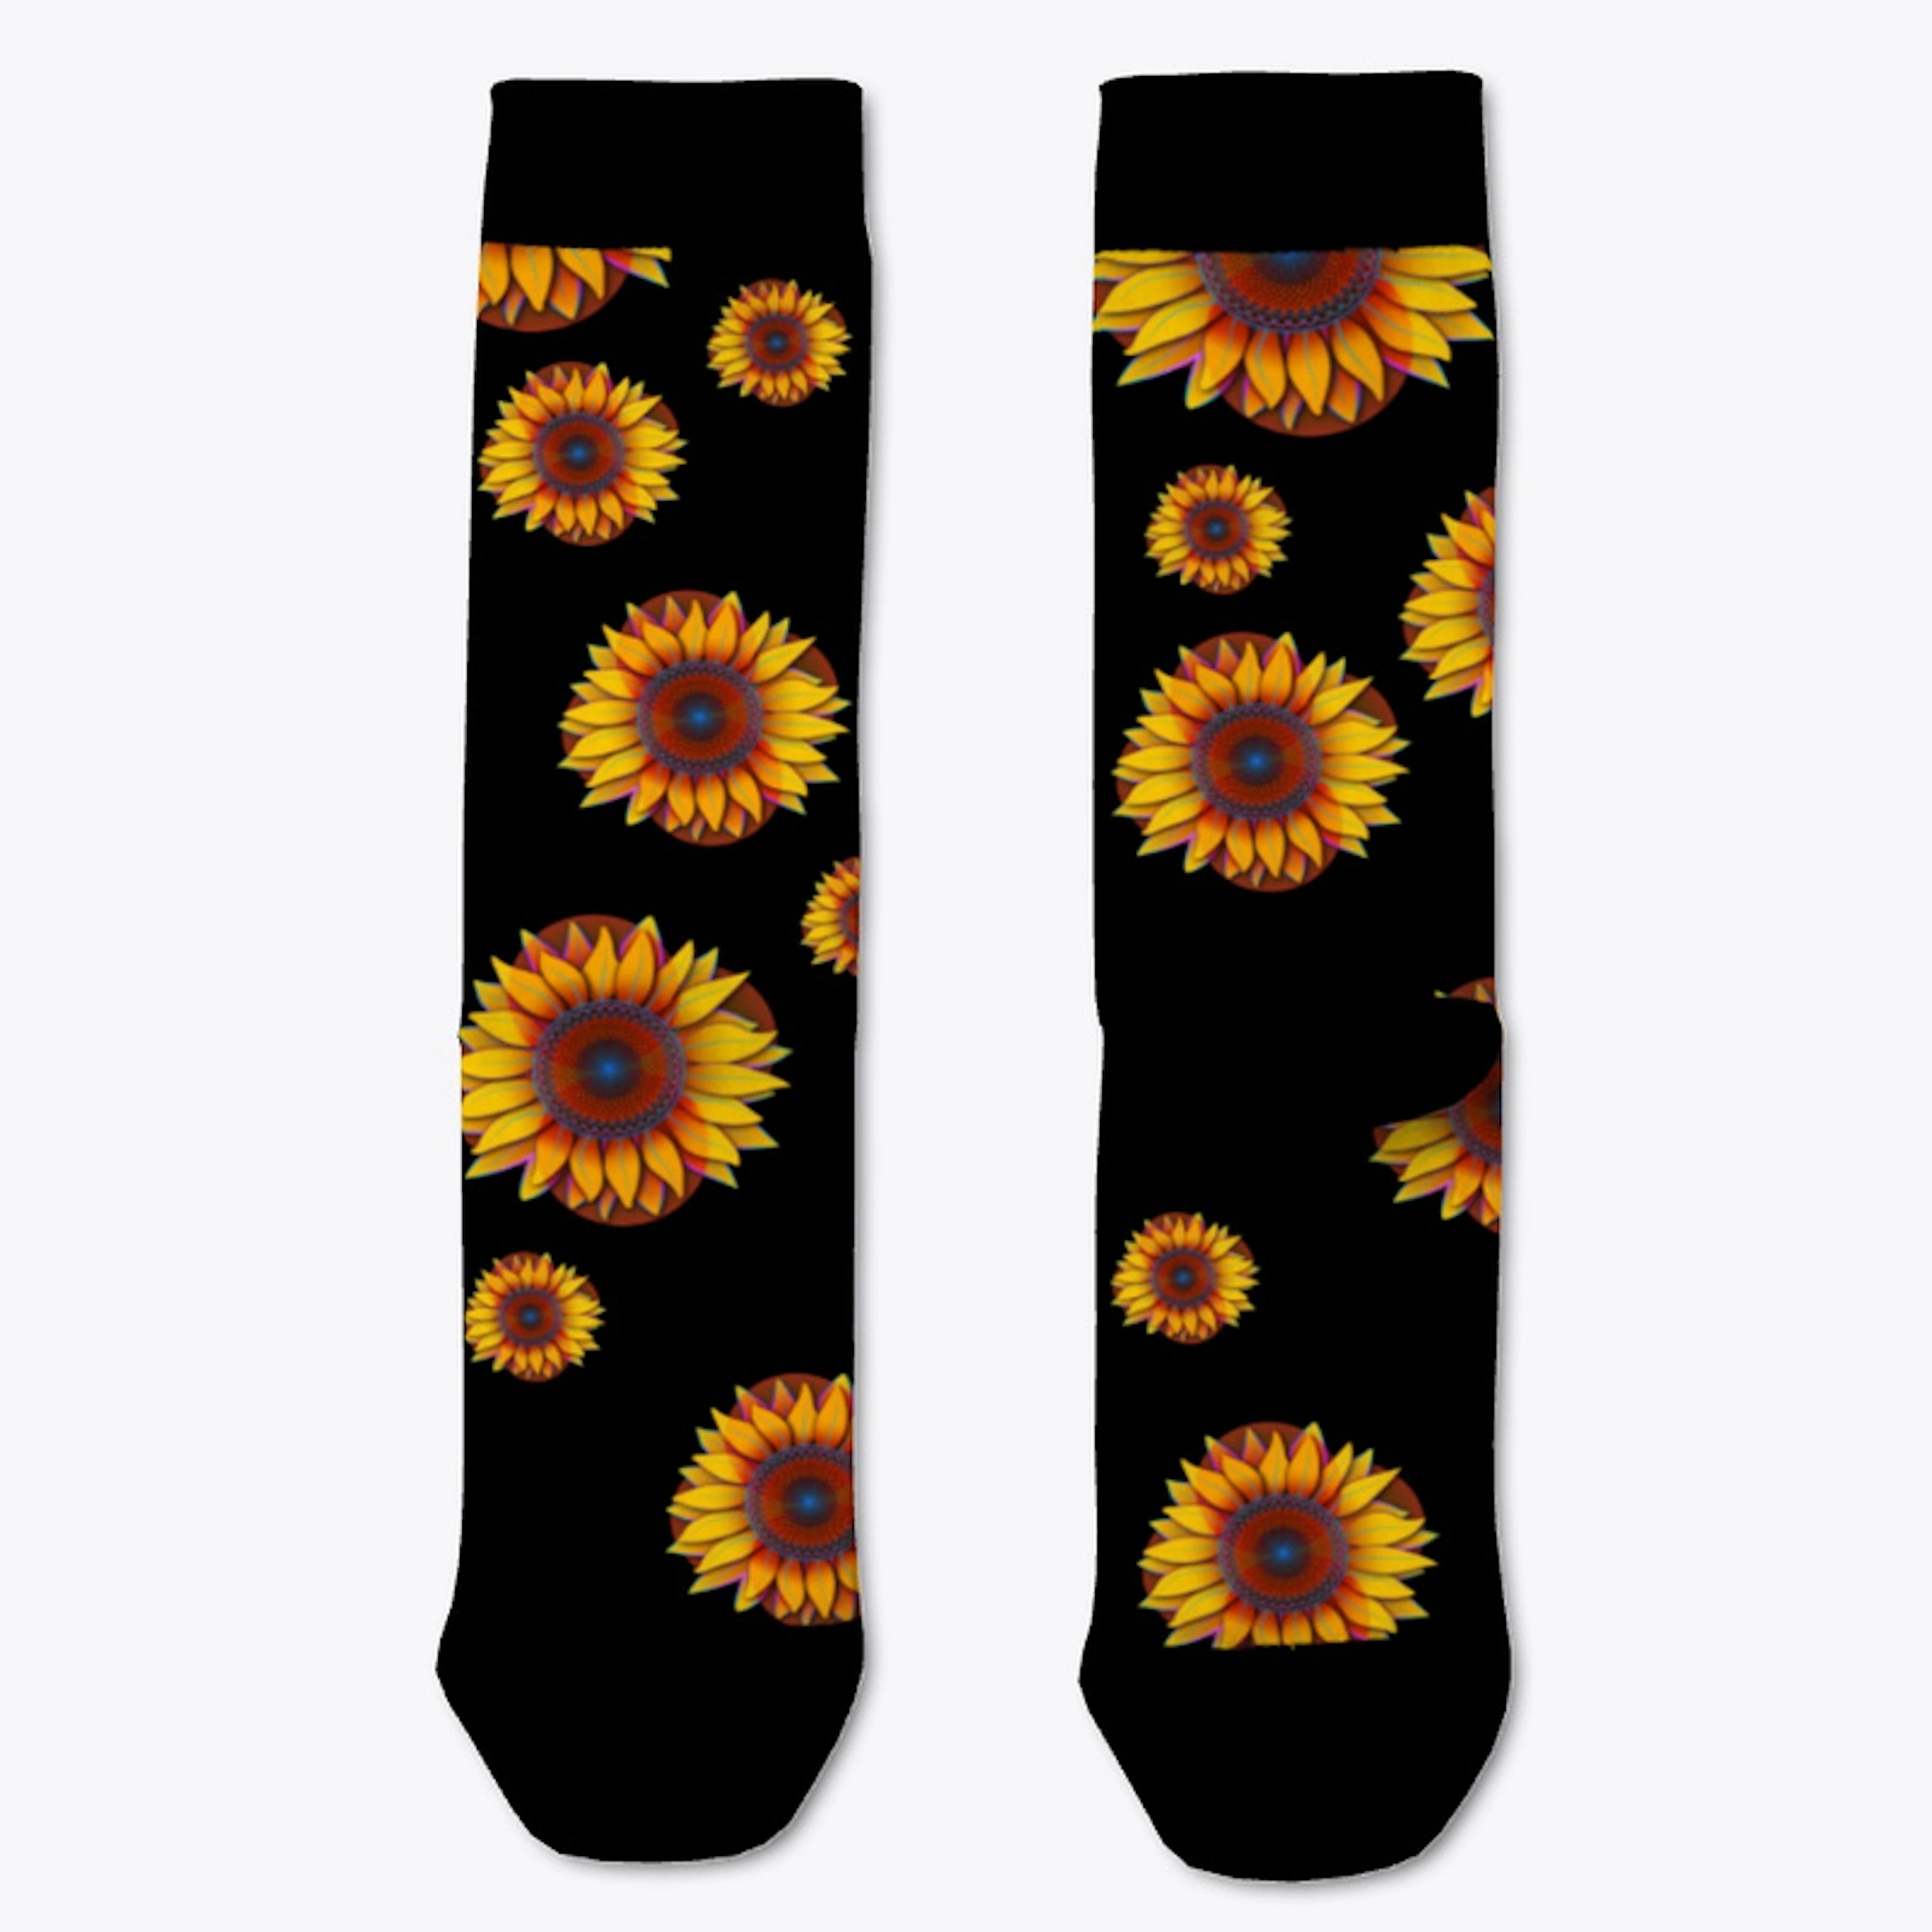 Sunflowers "Trippy Sunflower" Socks